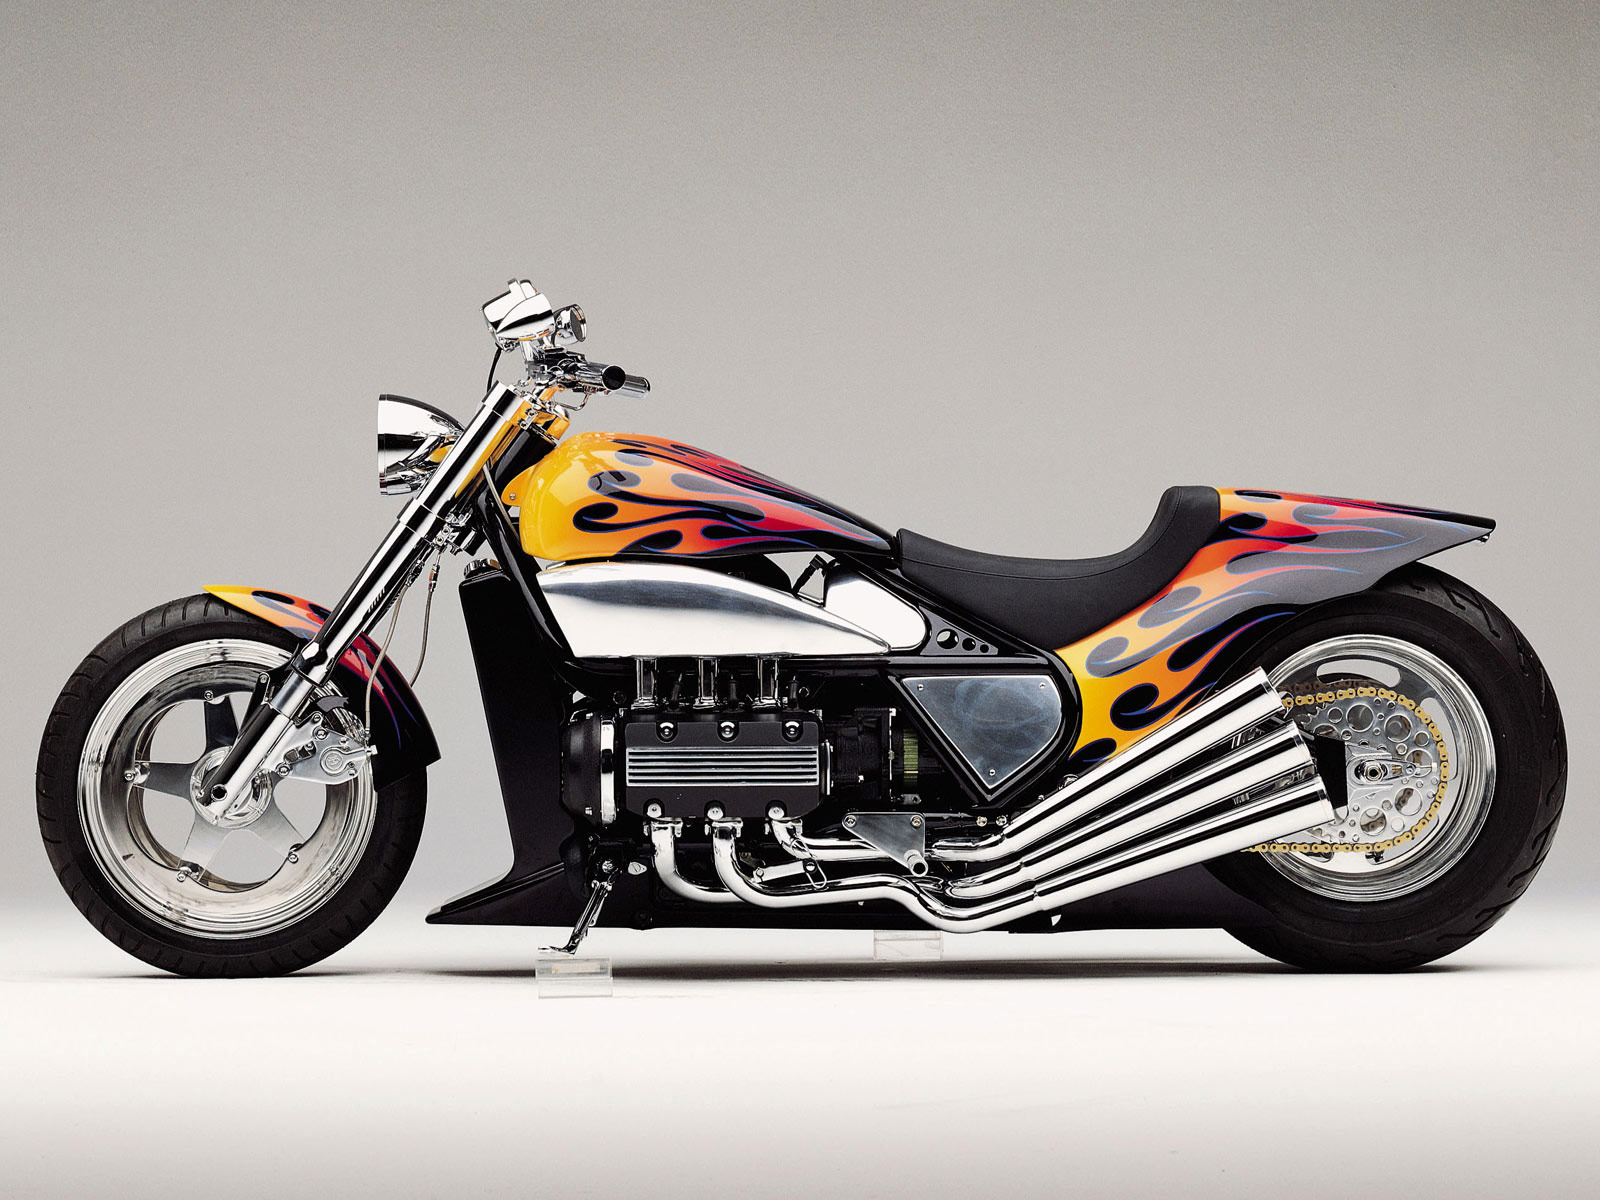 Honda Motorcycle Concept: honda T3 Concept